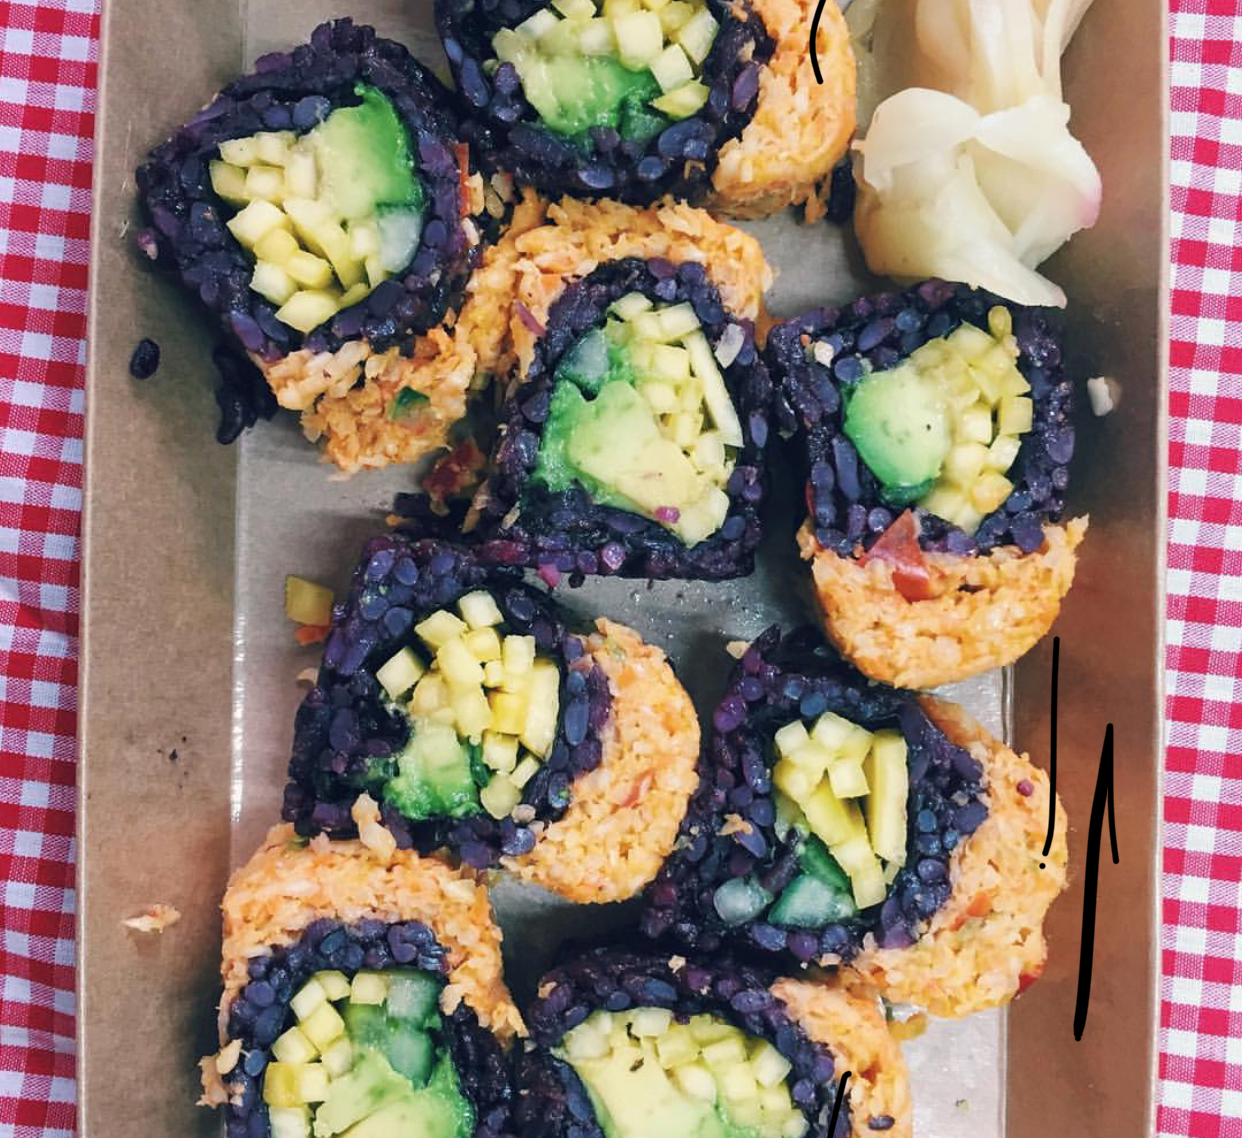 https://www.hobokengirl.com/wp-content/uploads/2018/06/beyond-sushi-nyc-vegan.jpg